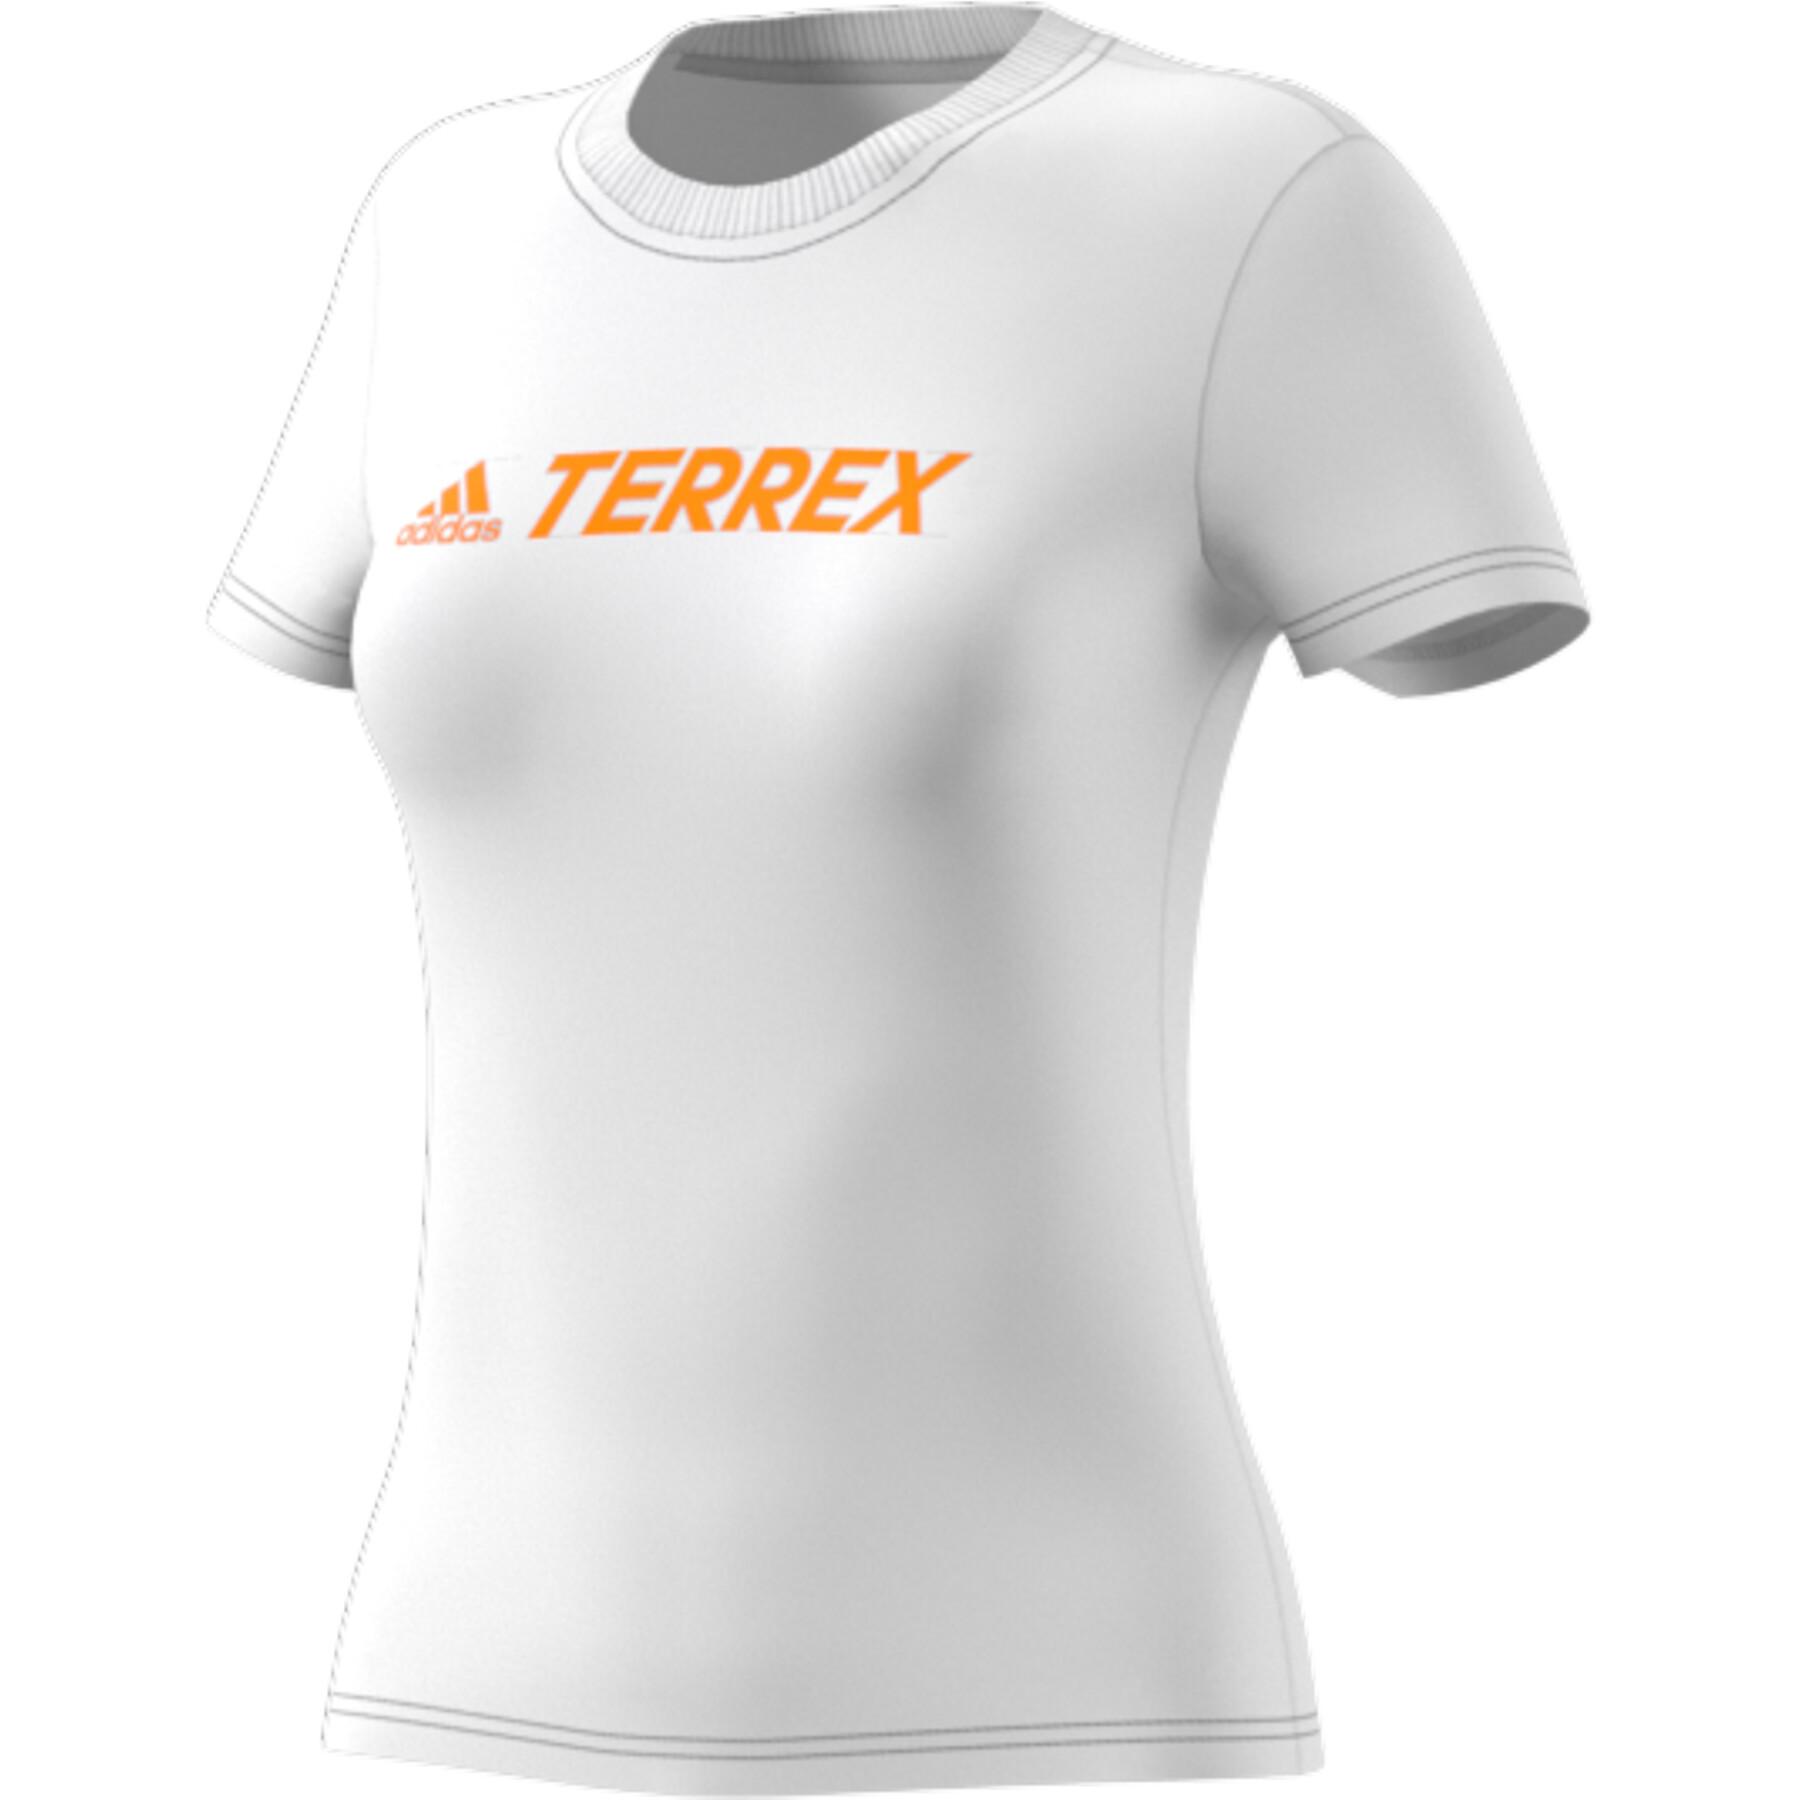 Camiseta feminina adidas Terrex Logo